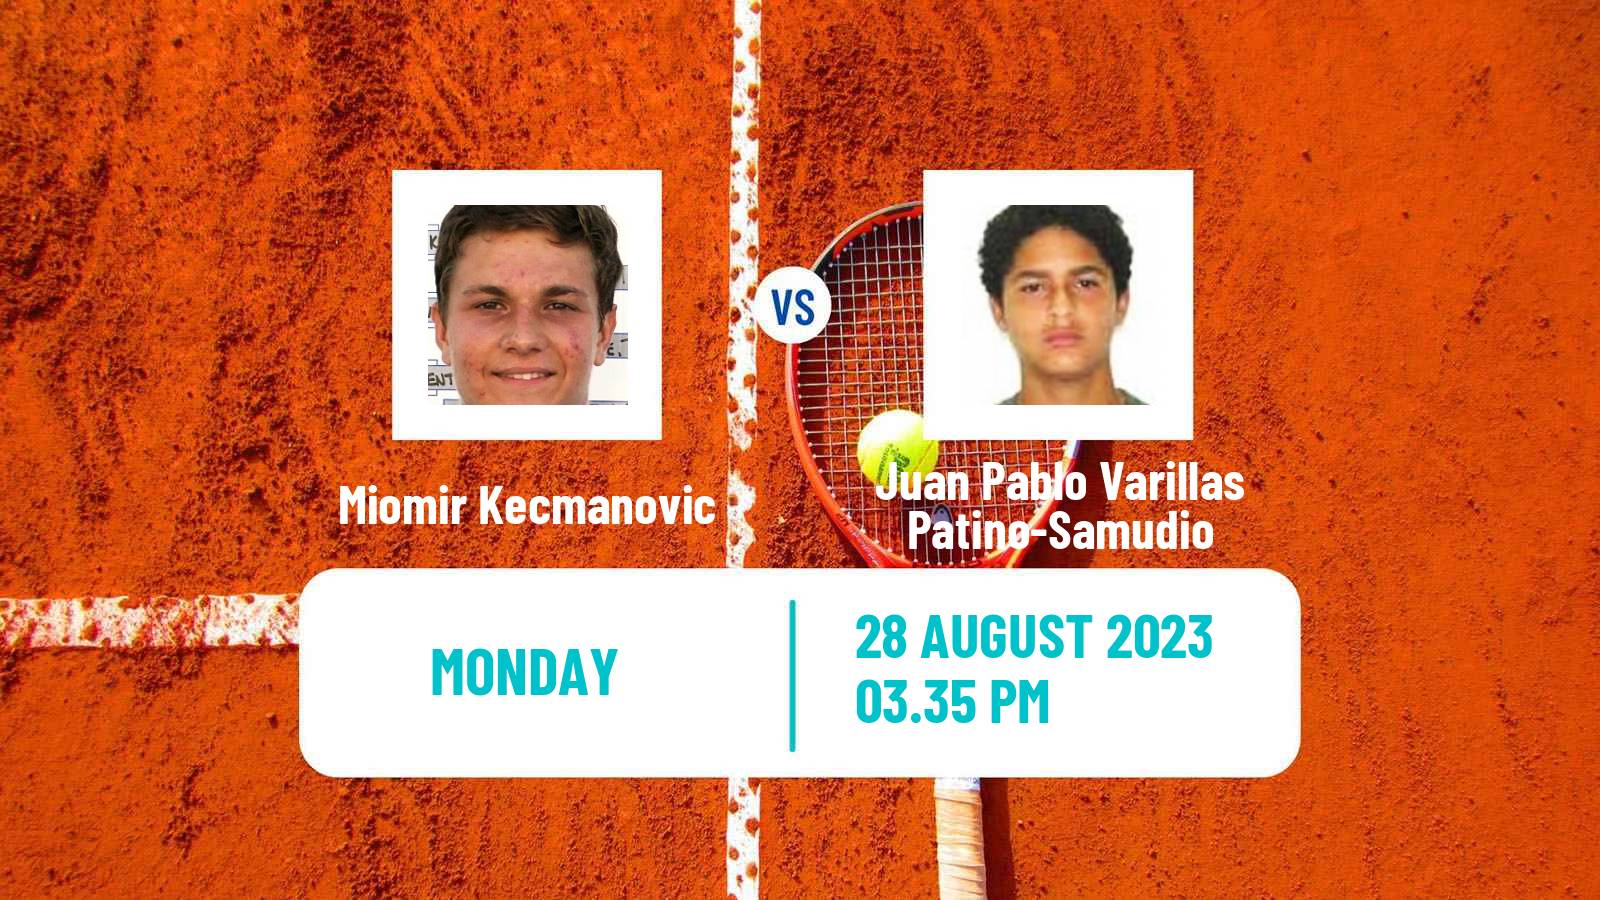 Tennis ATP US Open Miomir Kecmanovic - Juan Pablo Varillas Patino-Samudio